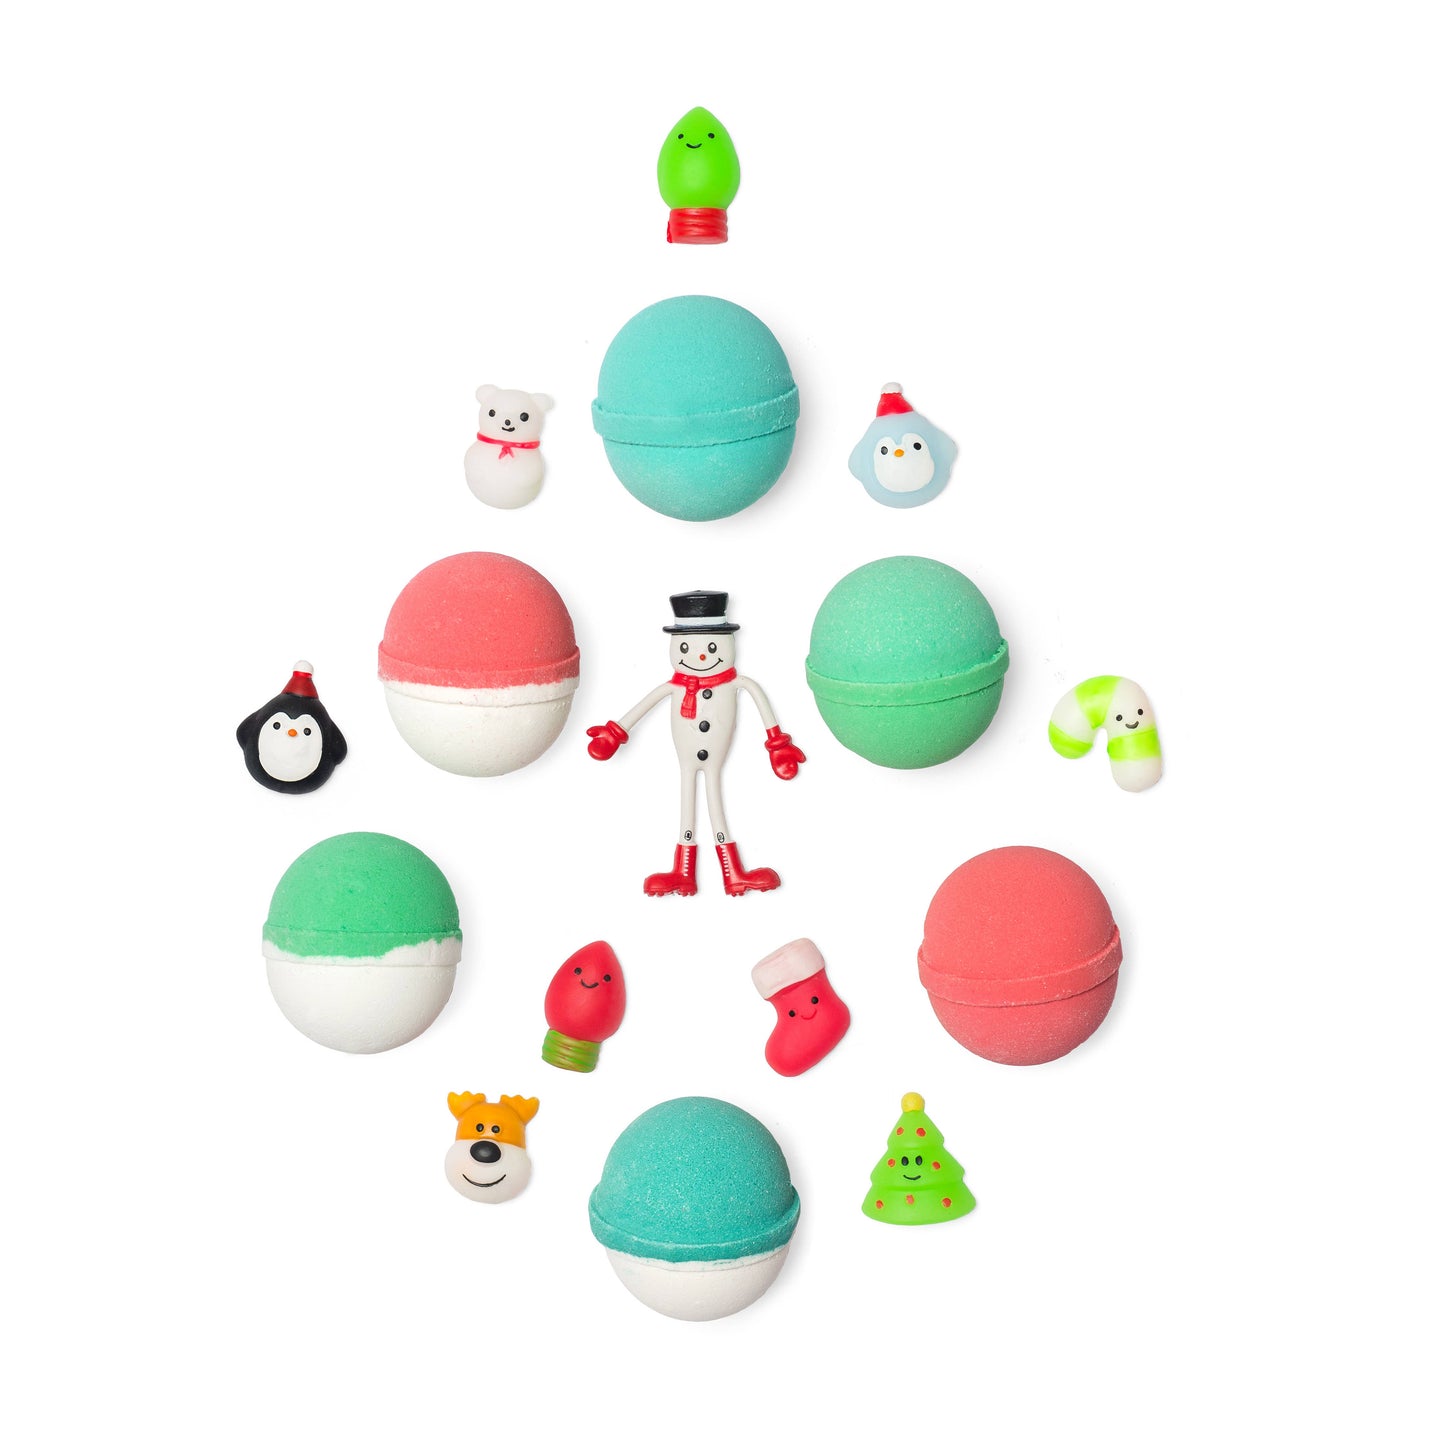 Purposeful Bliss - Fizzy Magic - Christmas Bath Bombs, Toys Inside LE, Display